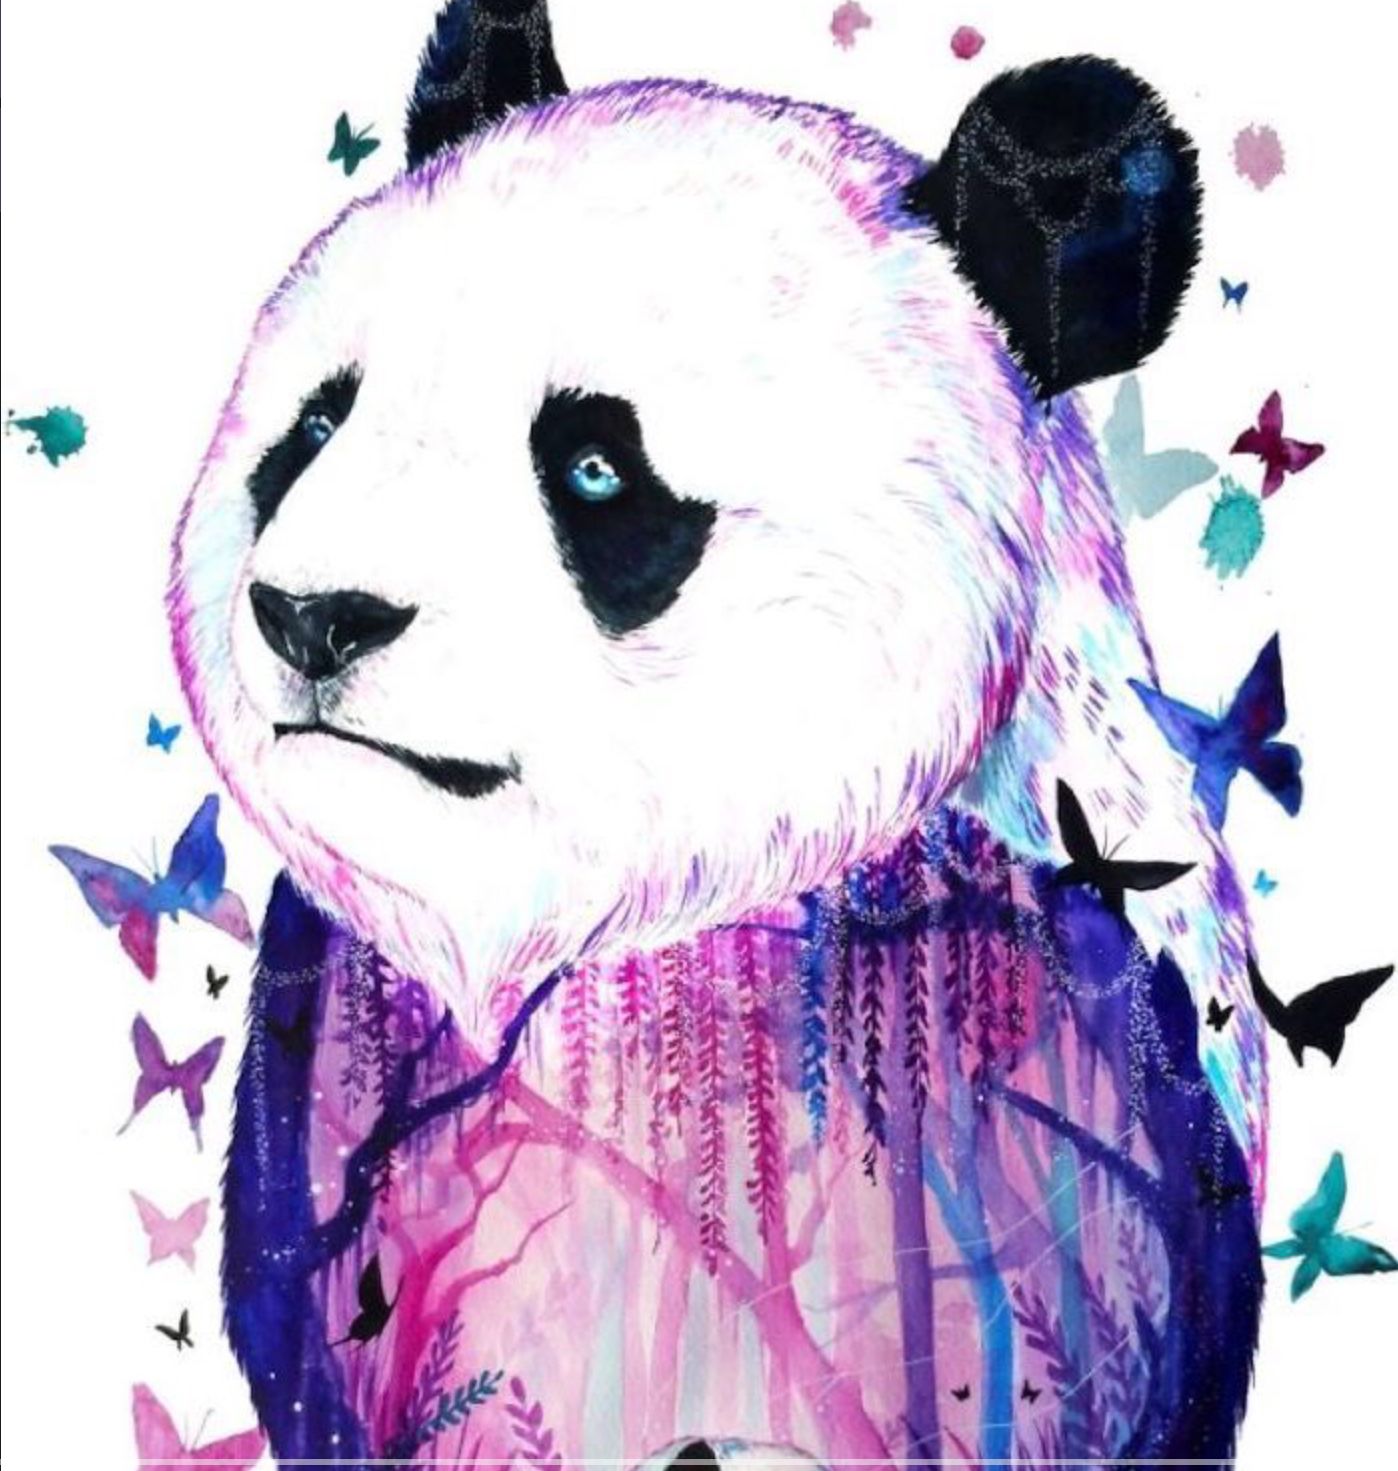 Galaxy Panda Wallpapers